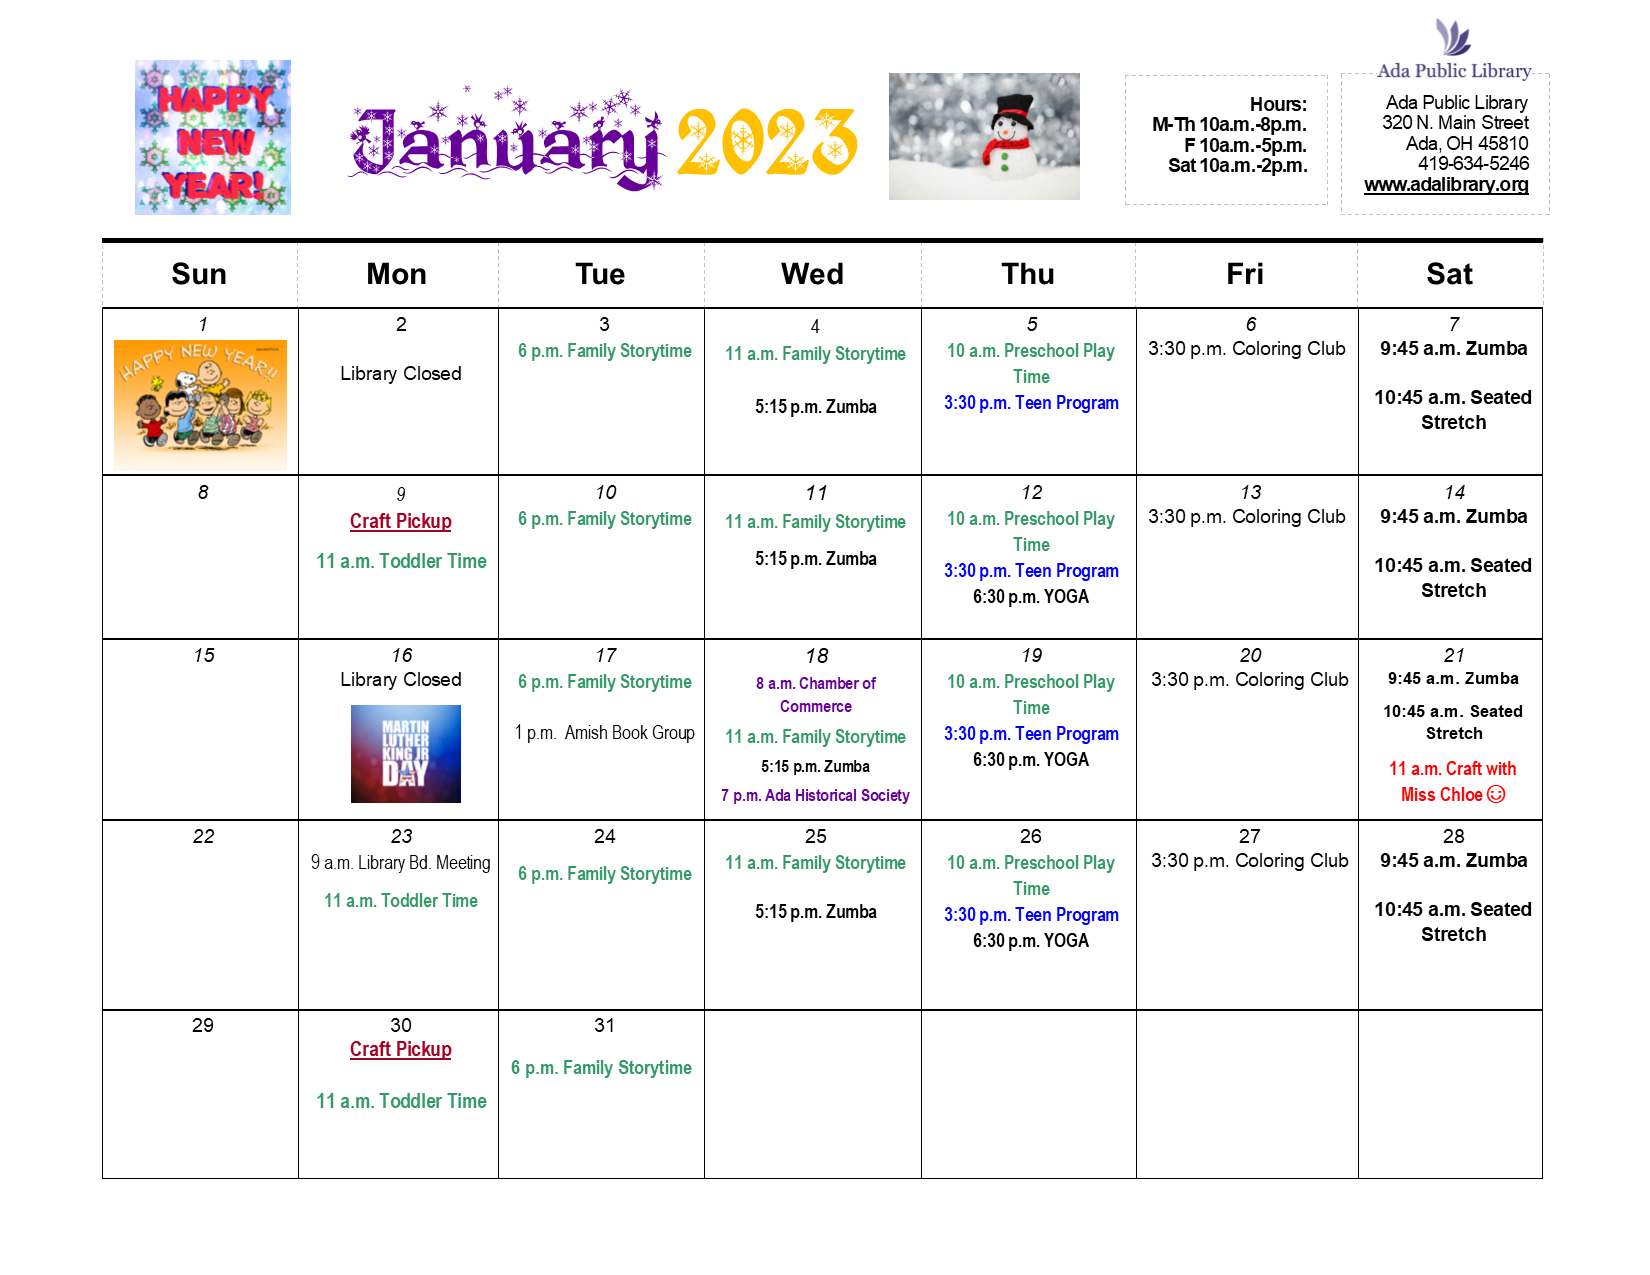 "January Calendar of Activities 2023"